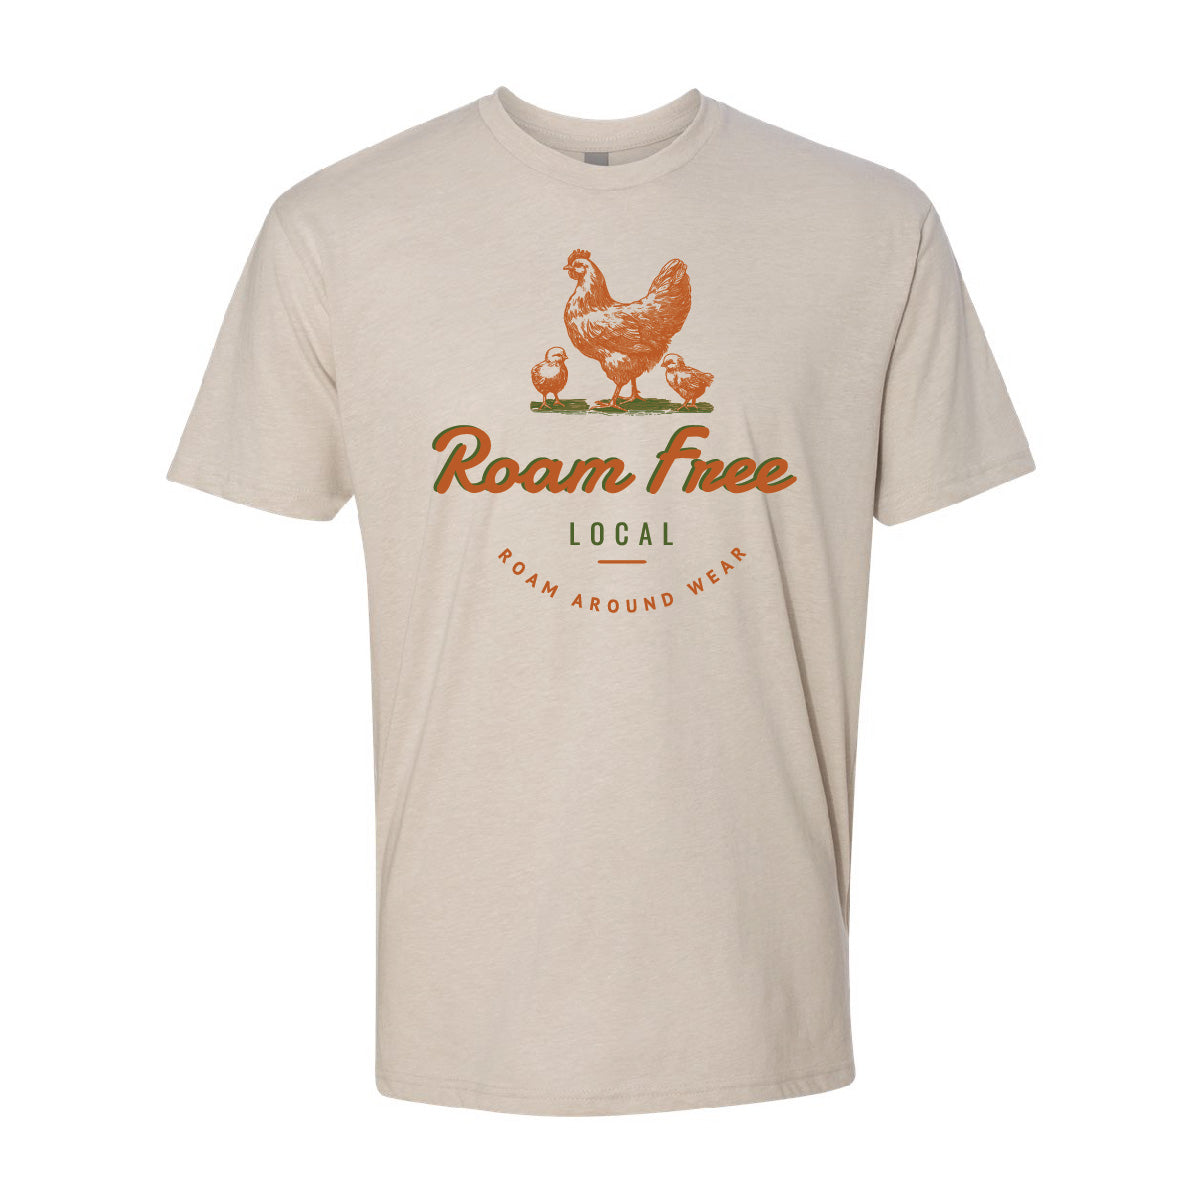 Roam Free Chicken Tee. Chicken Shirt. Ranch Shirt. Roam Around Wear is a Wyoming t-shirt company based in Gillette, Wyoming